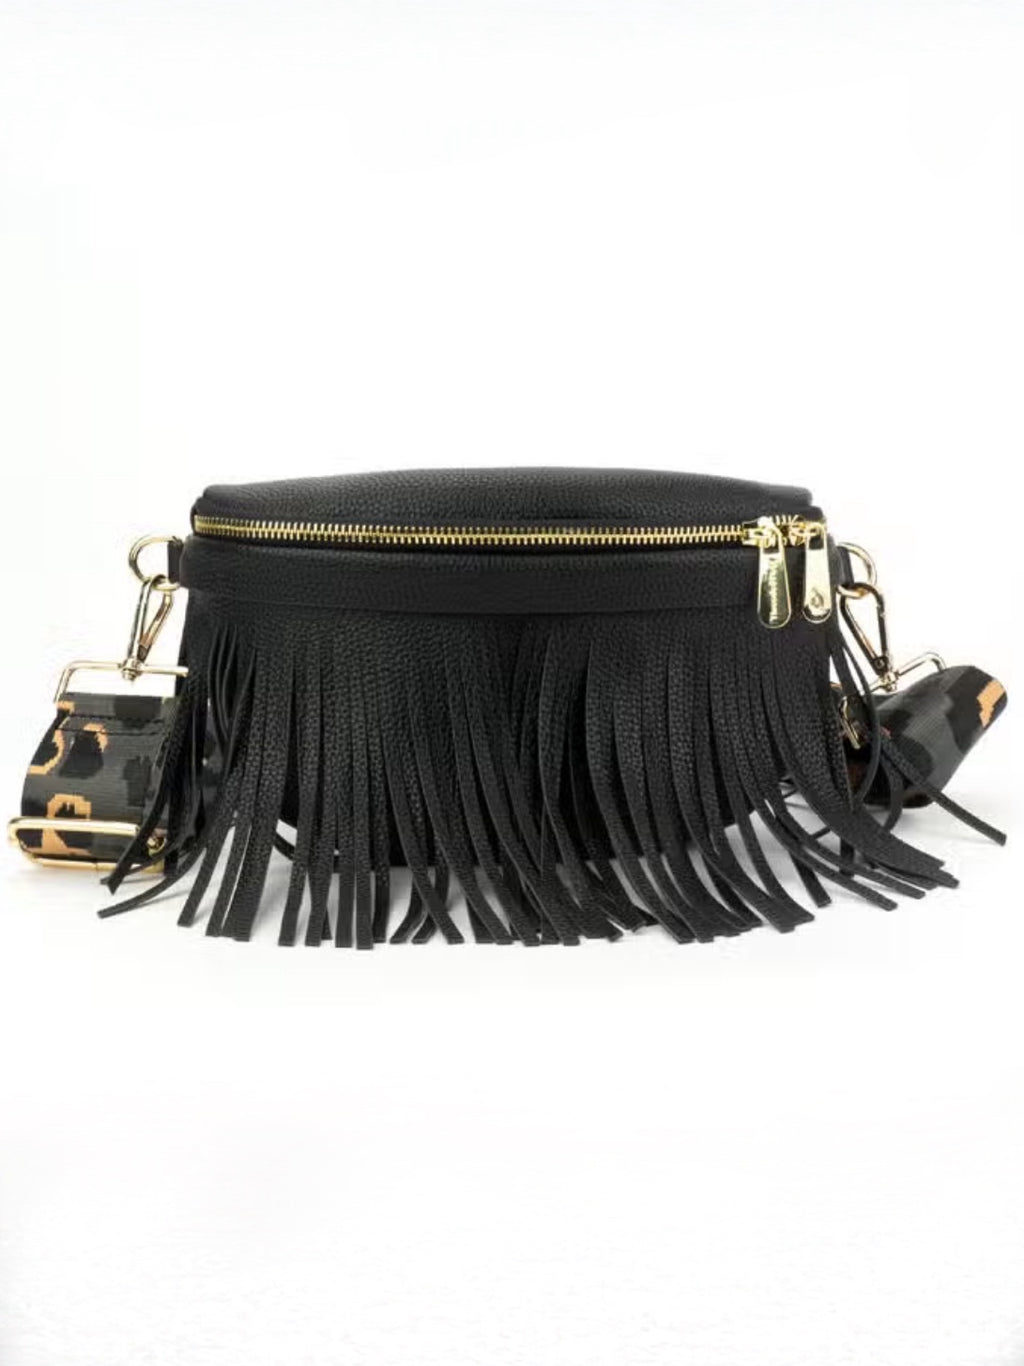 ETHNIC TASSEL PURSE Native American Fringe Leather Bag -  Norway